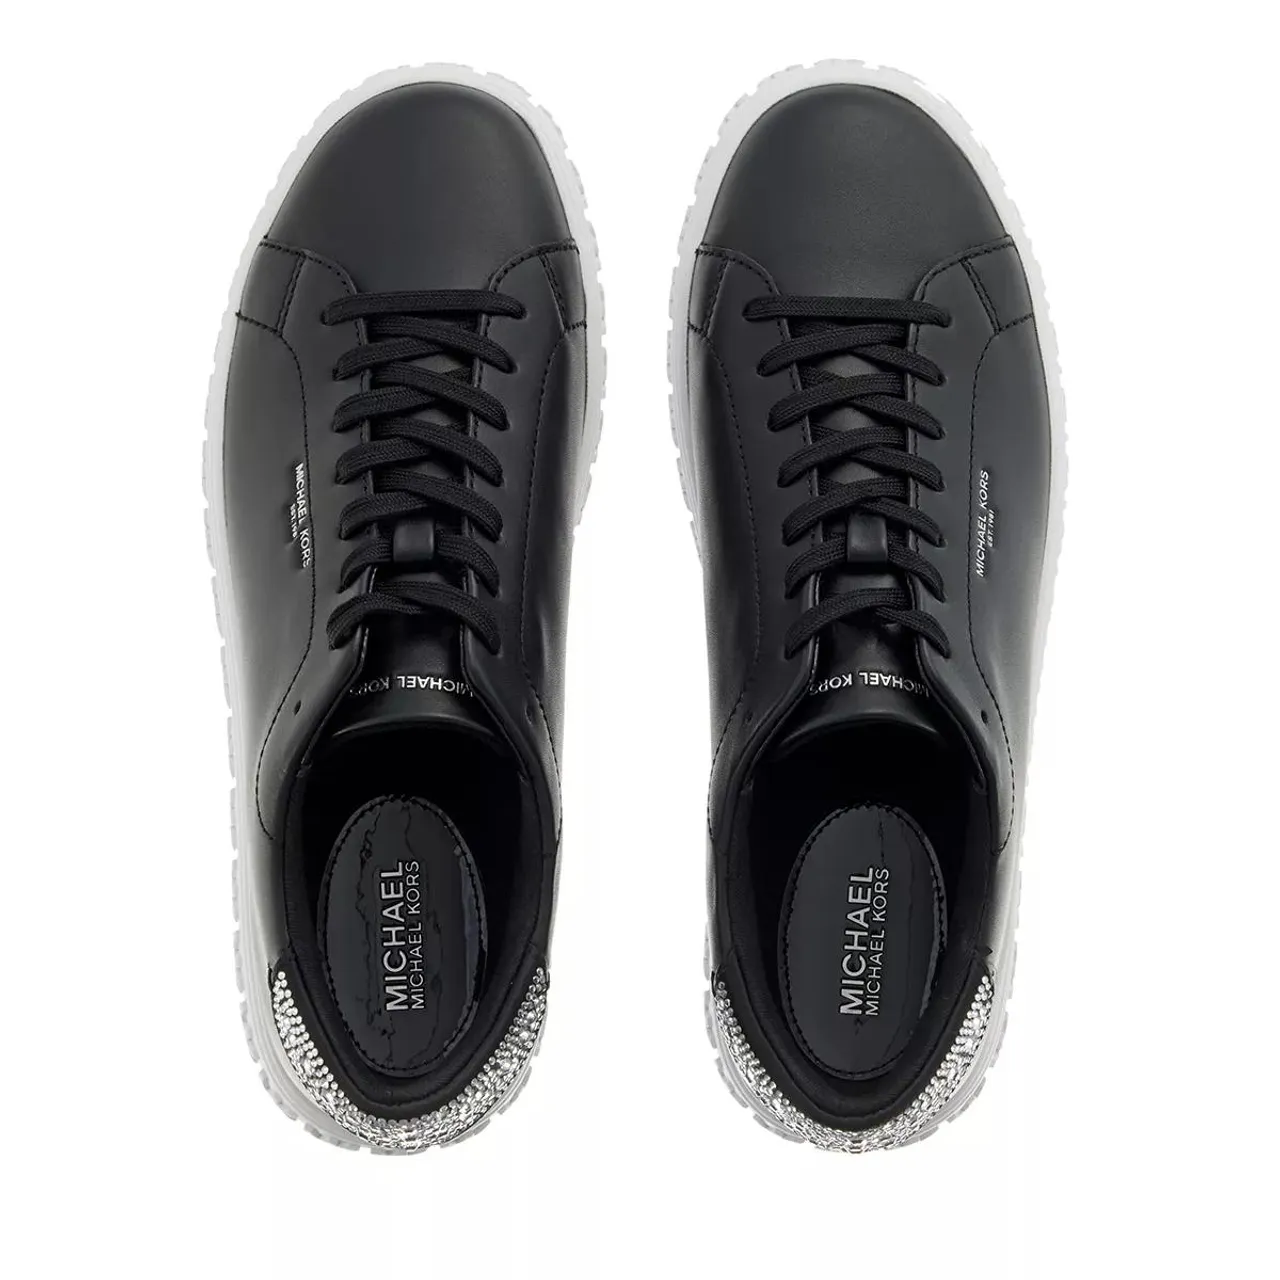 Michael Kors Sneakers - Grove Lace Up - black - Sneakers for ladies